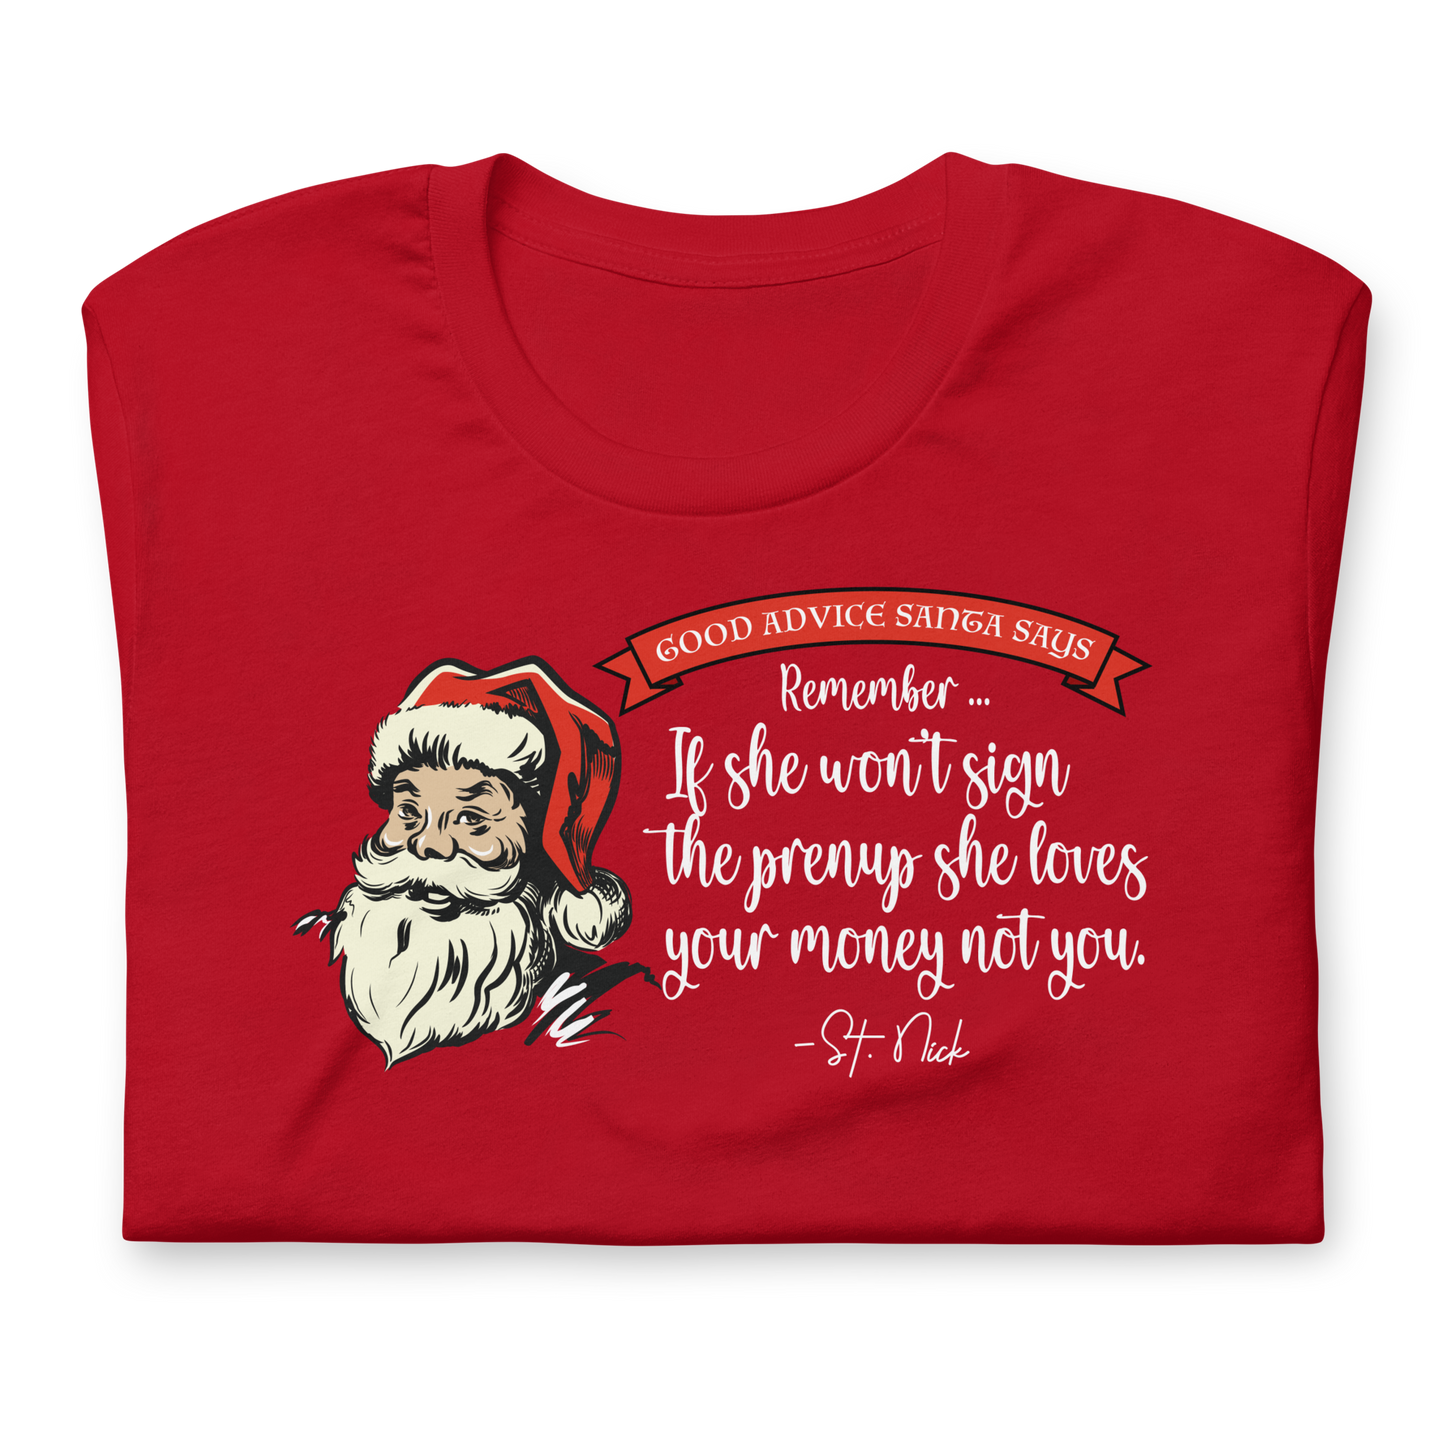 Unisex - CHRISTMAS - Good Advice Santa Says - If She Won't Sign a prenup ... - Funny t-shirt